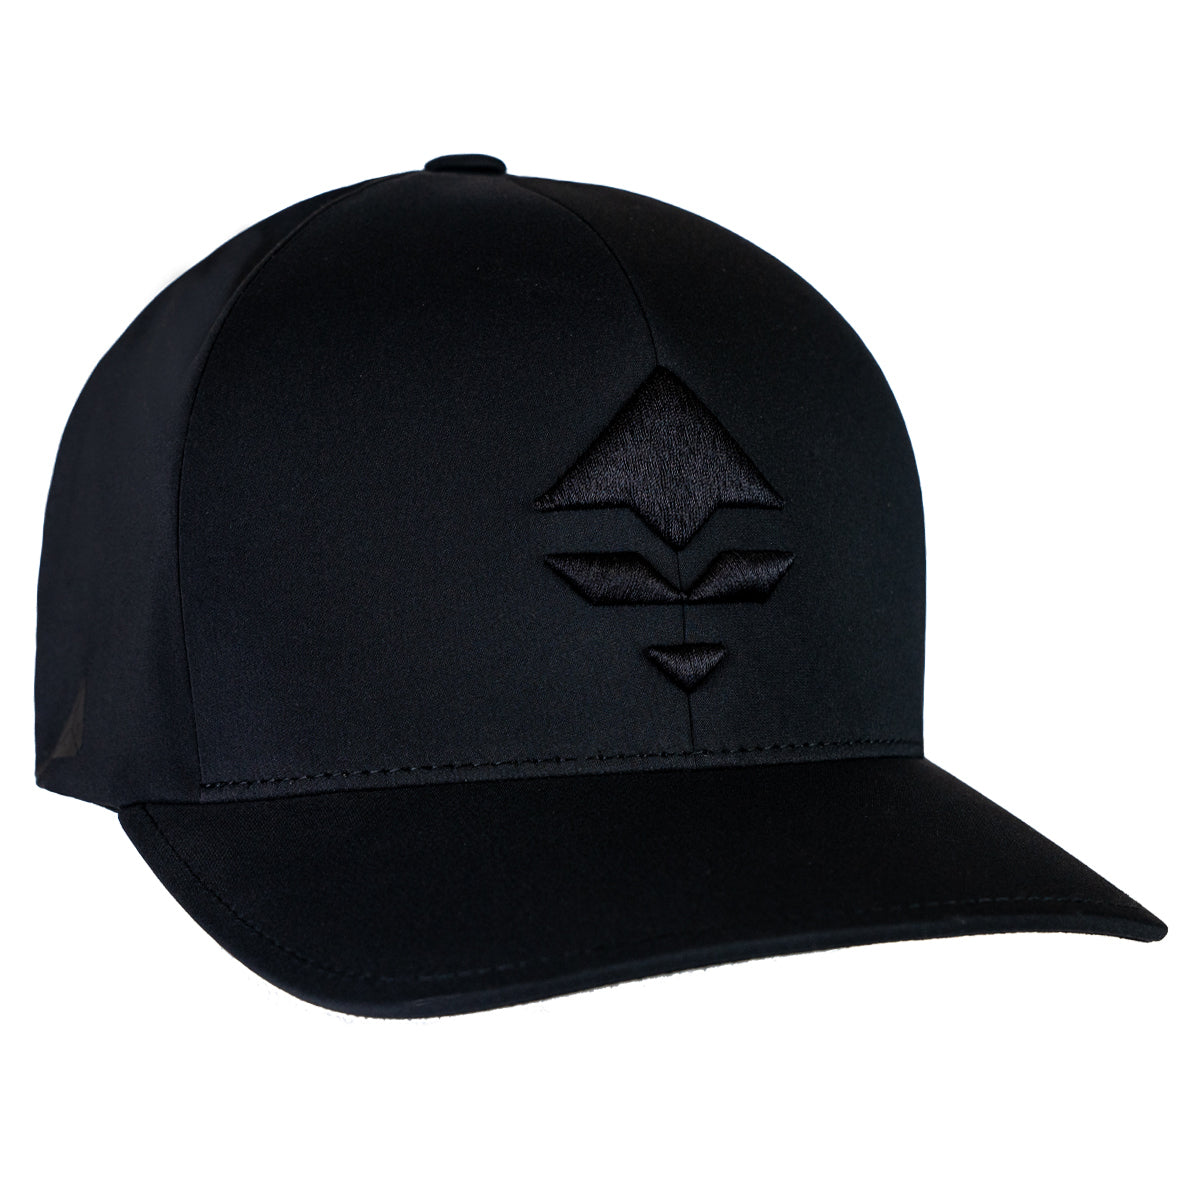 GOHUNT Delta Hat in Black by GOHUNT | GOHUNT - GOHUNT Shop